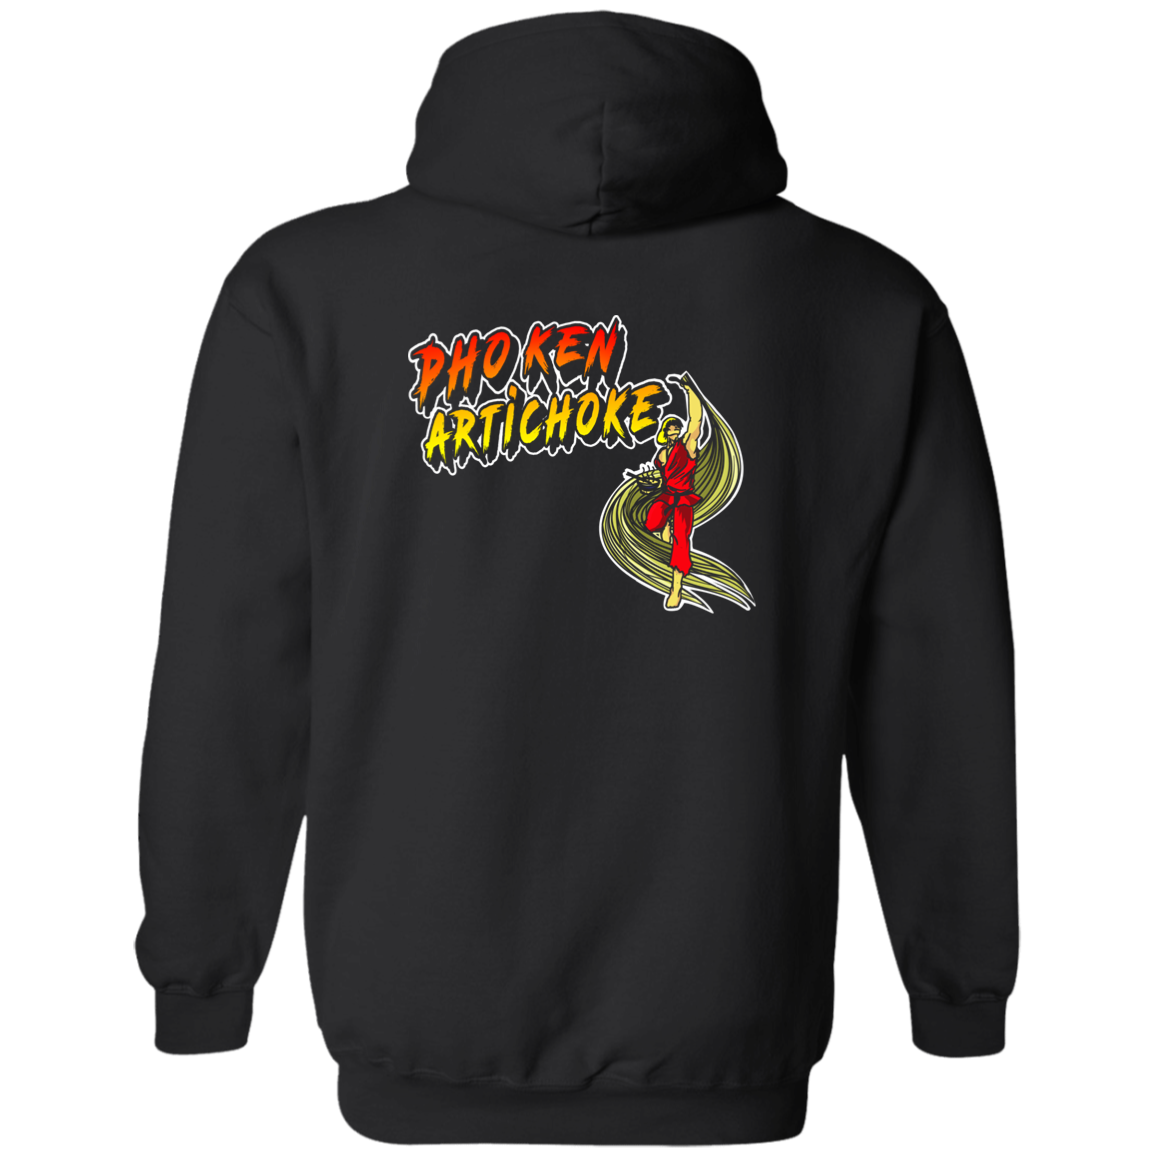 ArtichokeUSA Custom Design. Pho Ken Artichoke. Street Fighter Parody. Gaming. Zip Up Hooded Sweatshirt